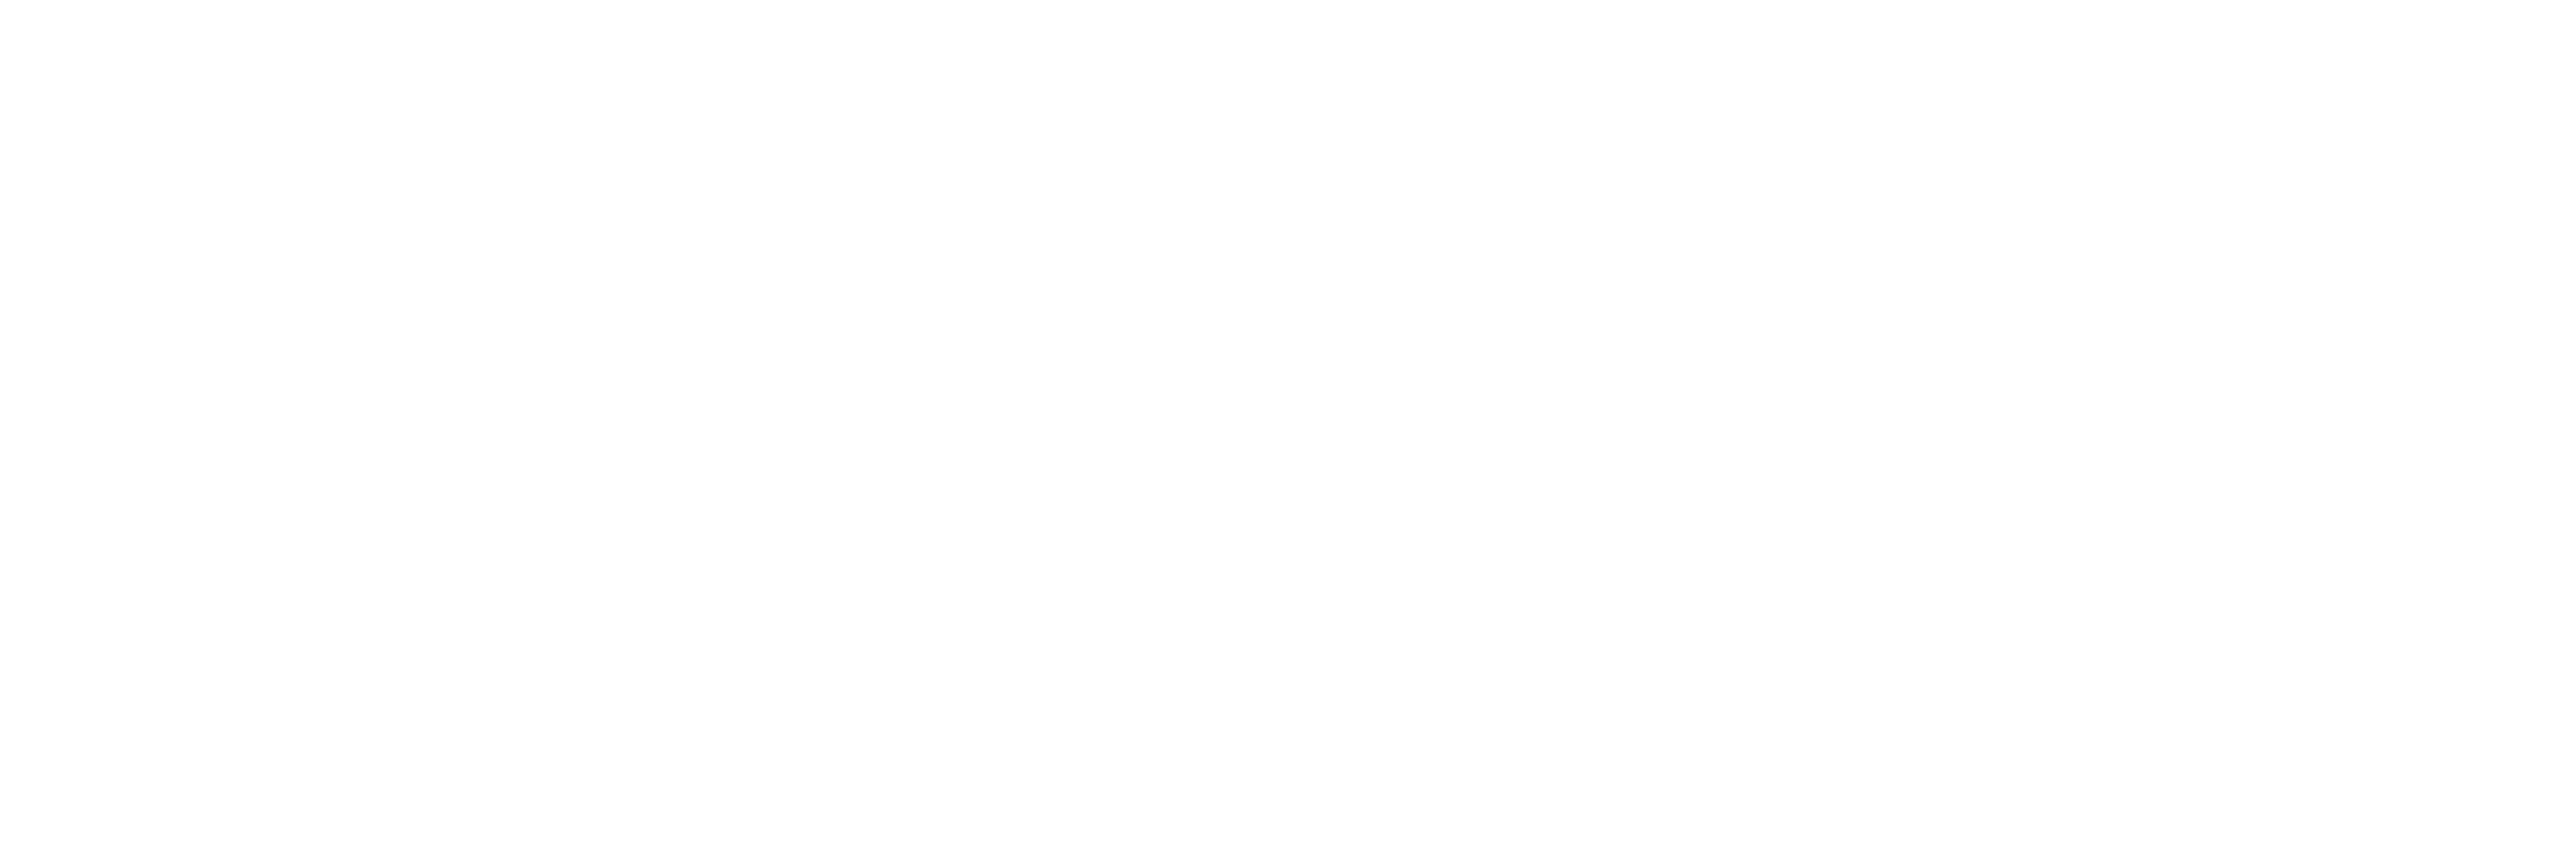 marshall_london_dry_gin37 copy